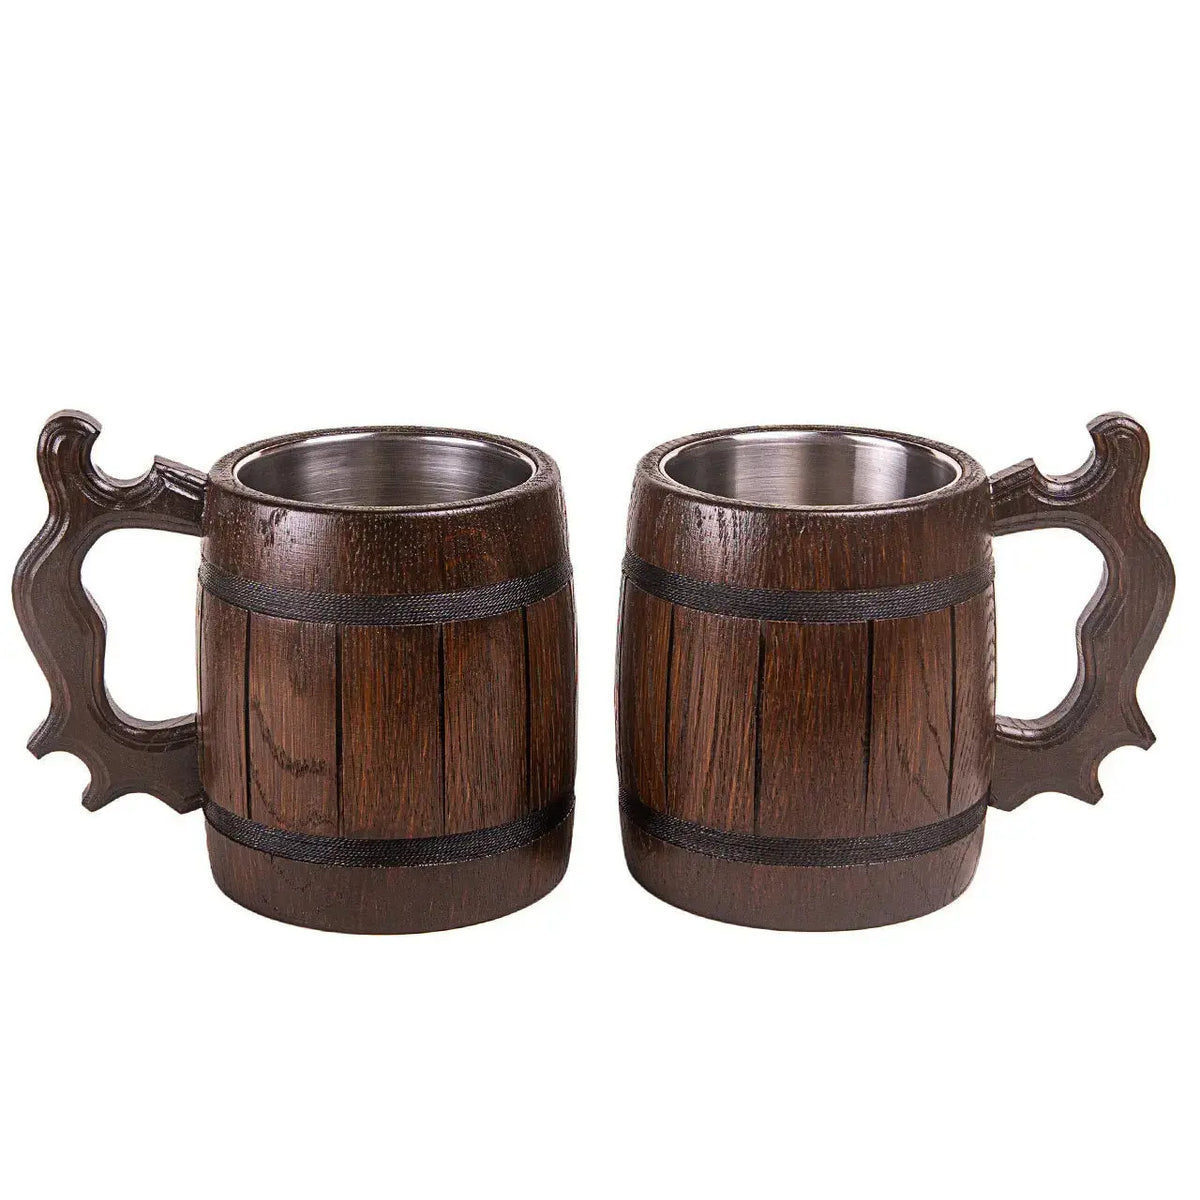 2 pcs Wooden Beer Cups Wood Mug